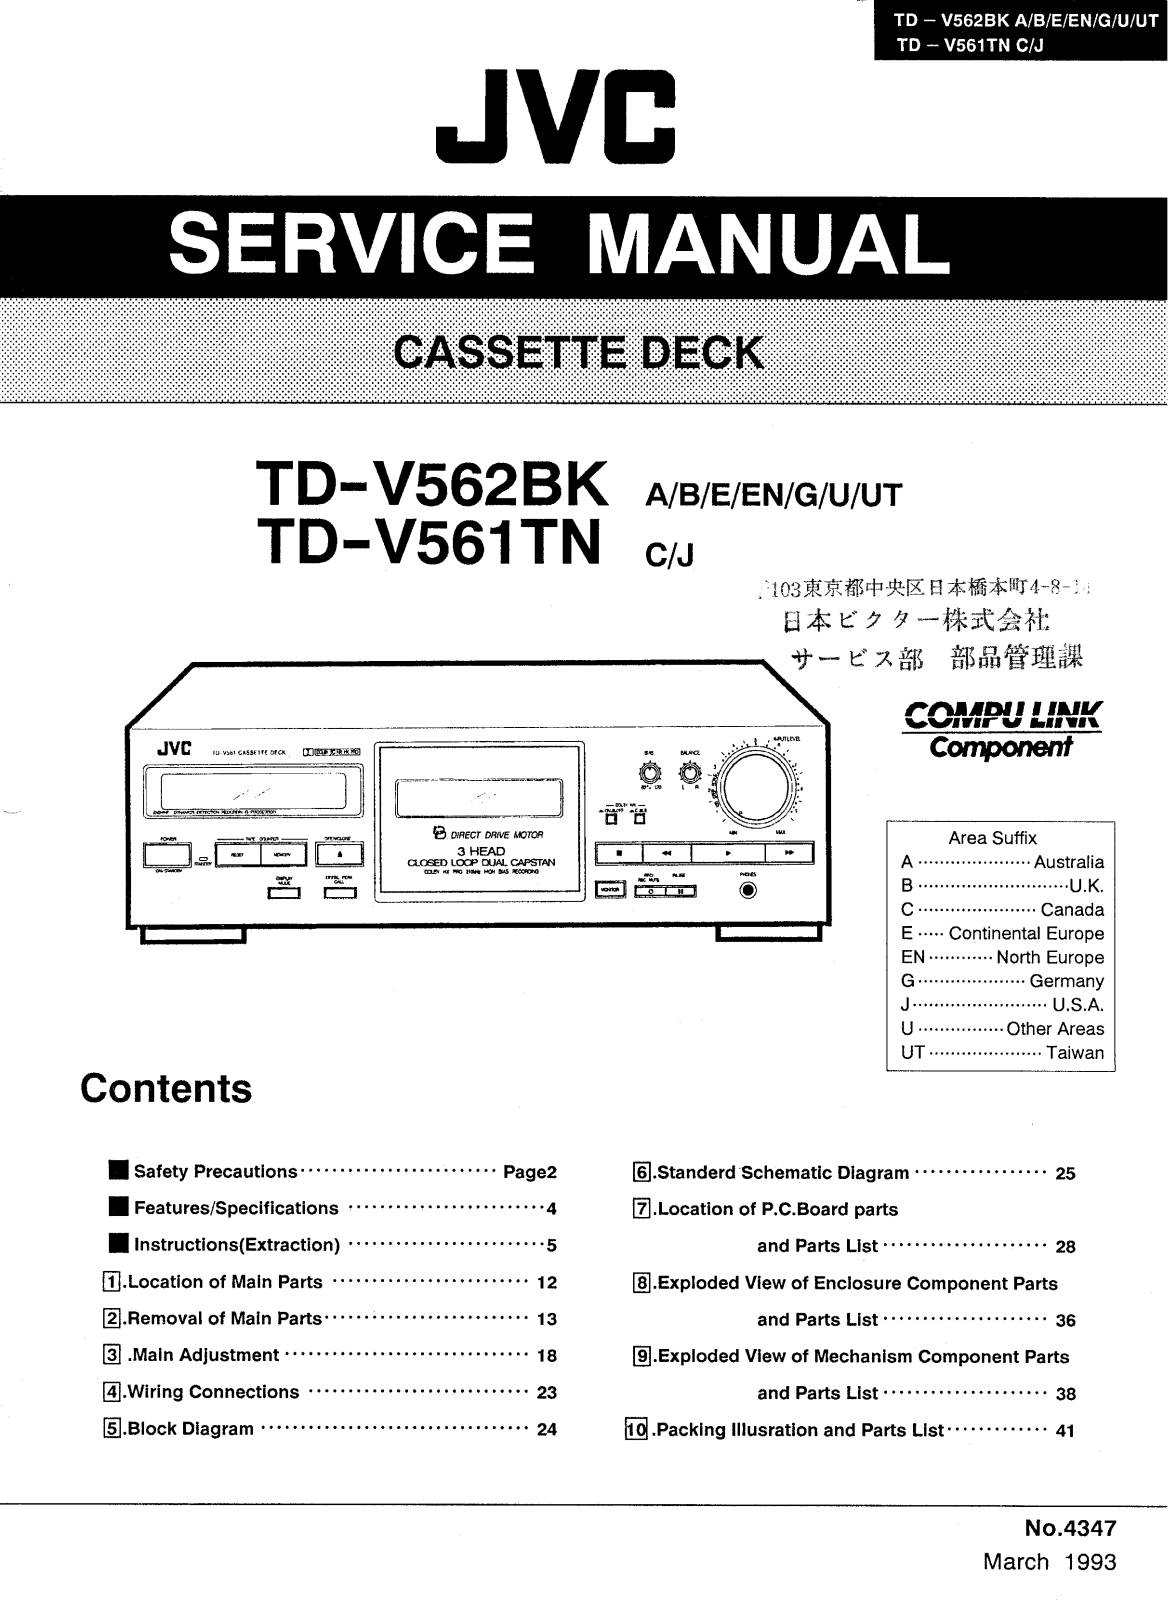 JVC TD-V561